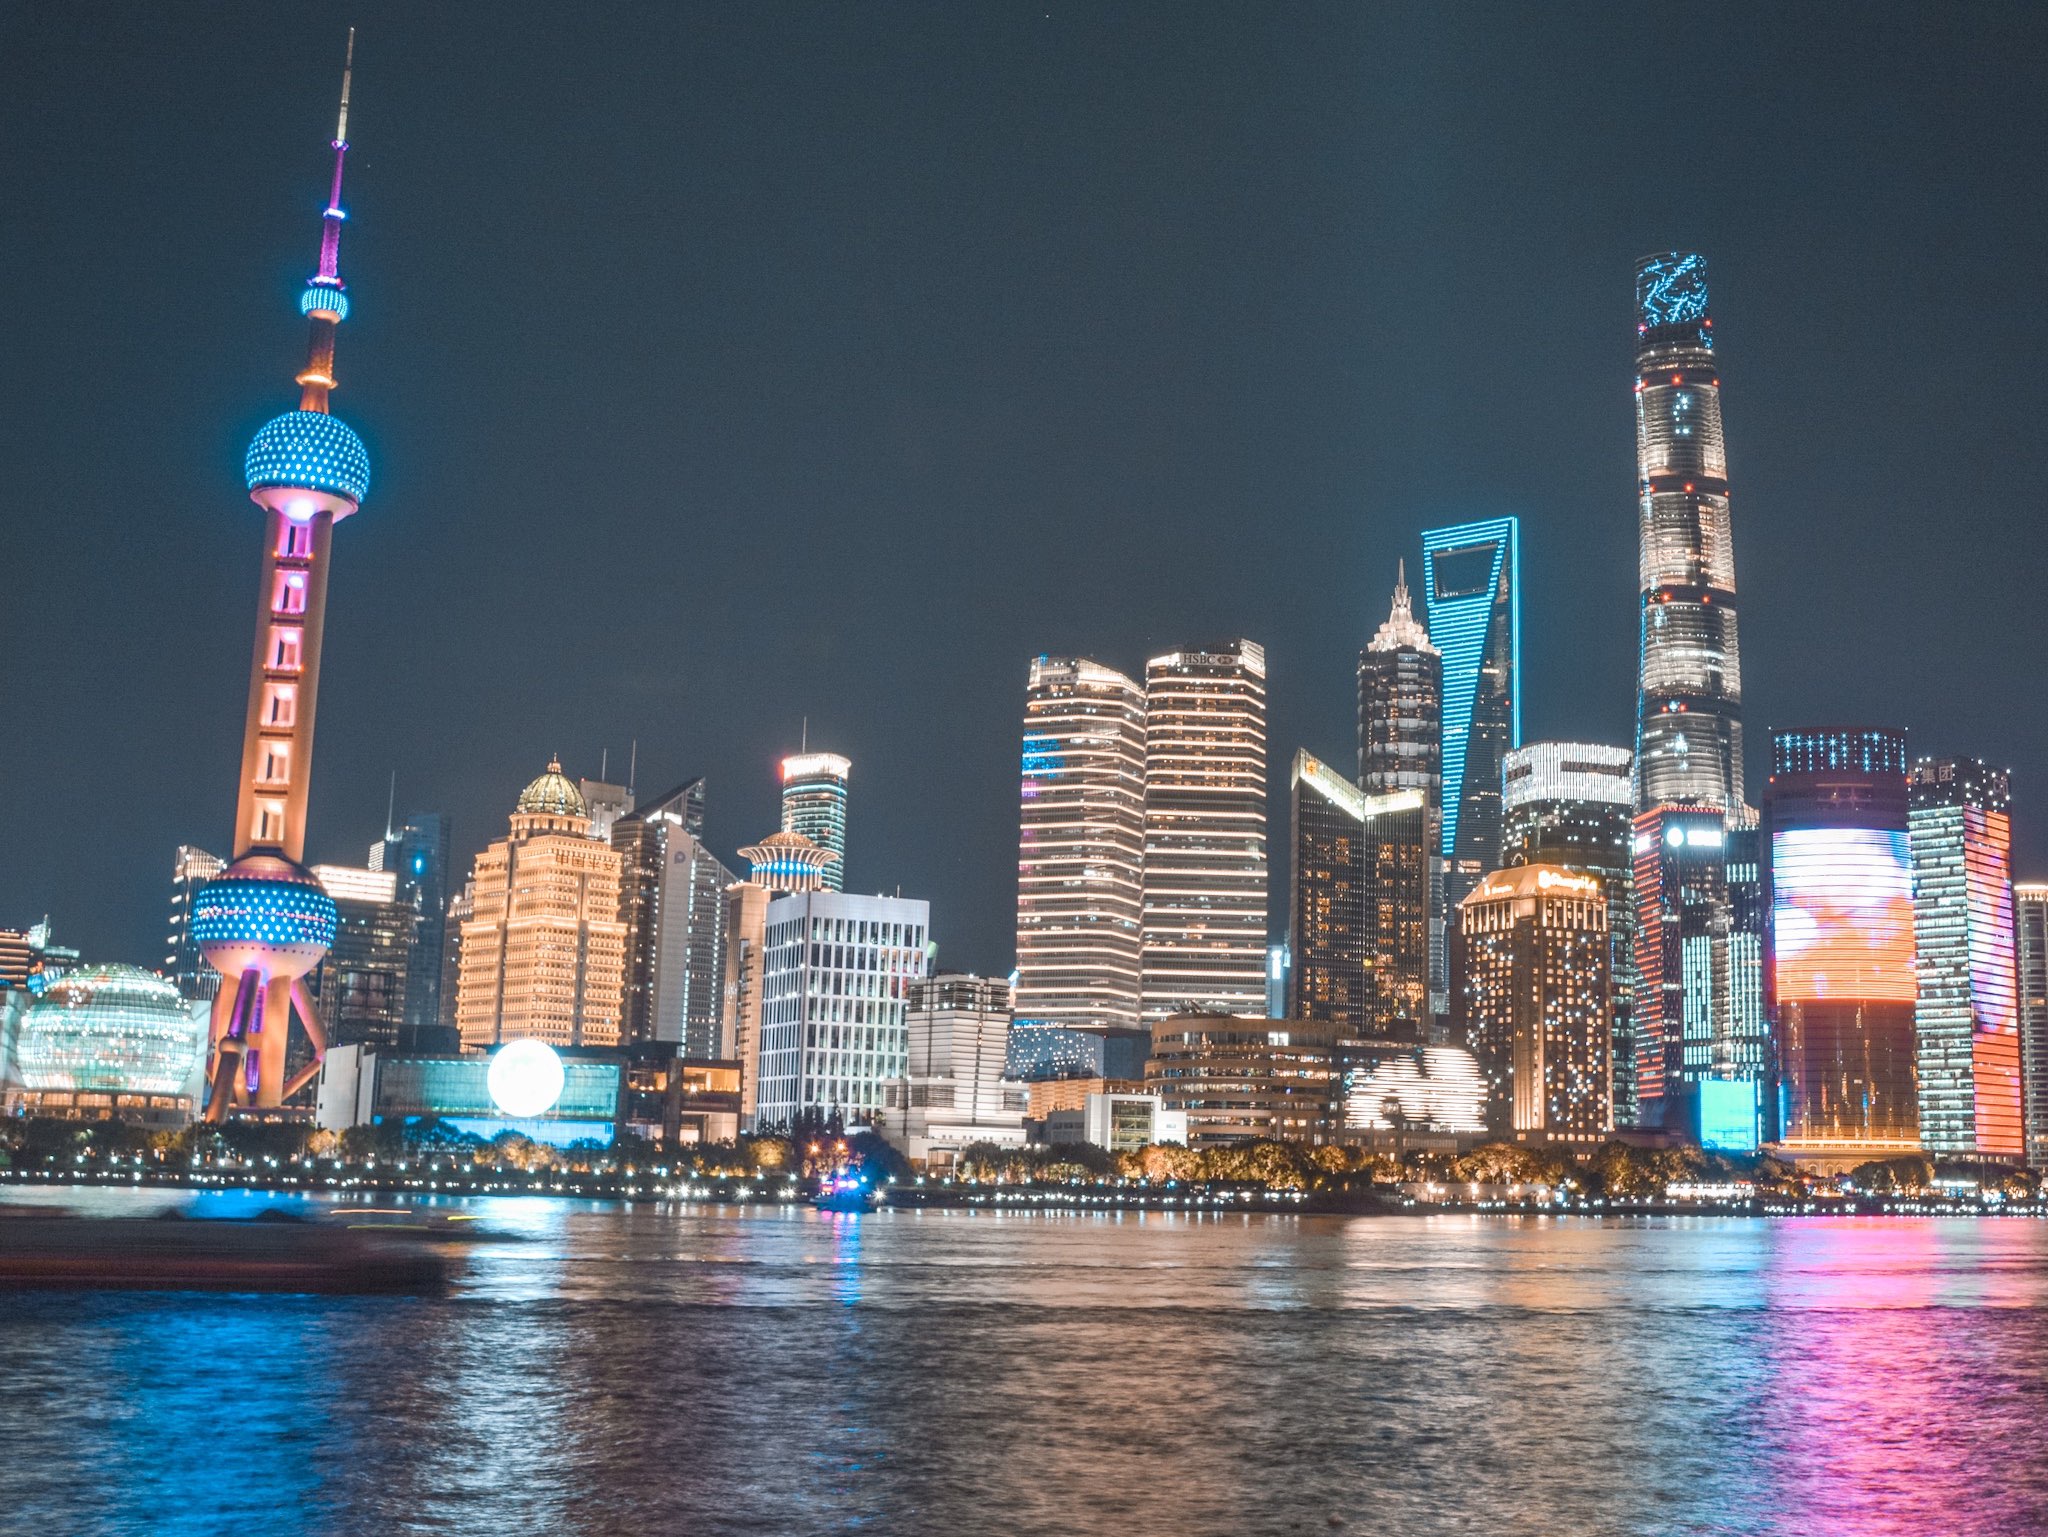 Shanghai at night. bund lights! 🏙🌃 | Trip.com Shanghai Travelogues